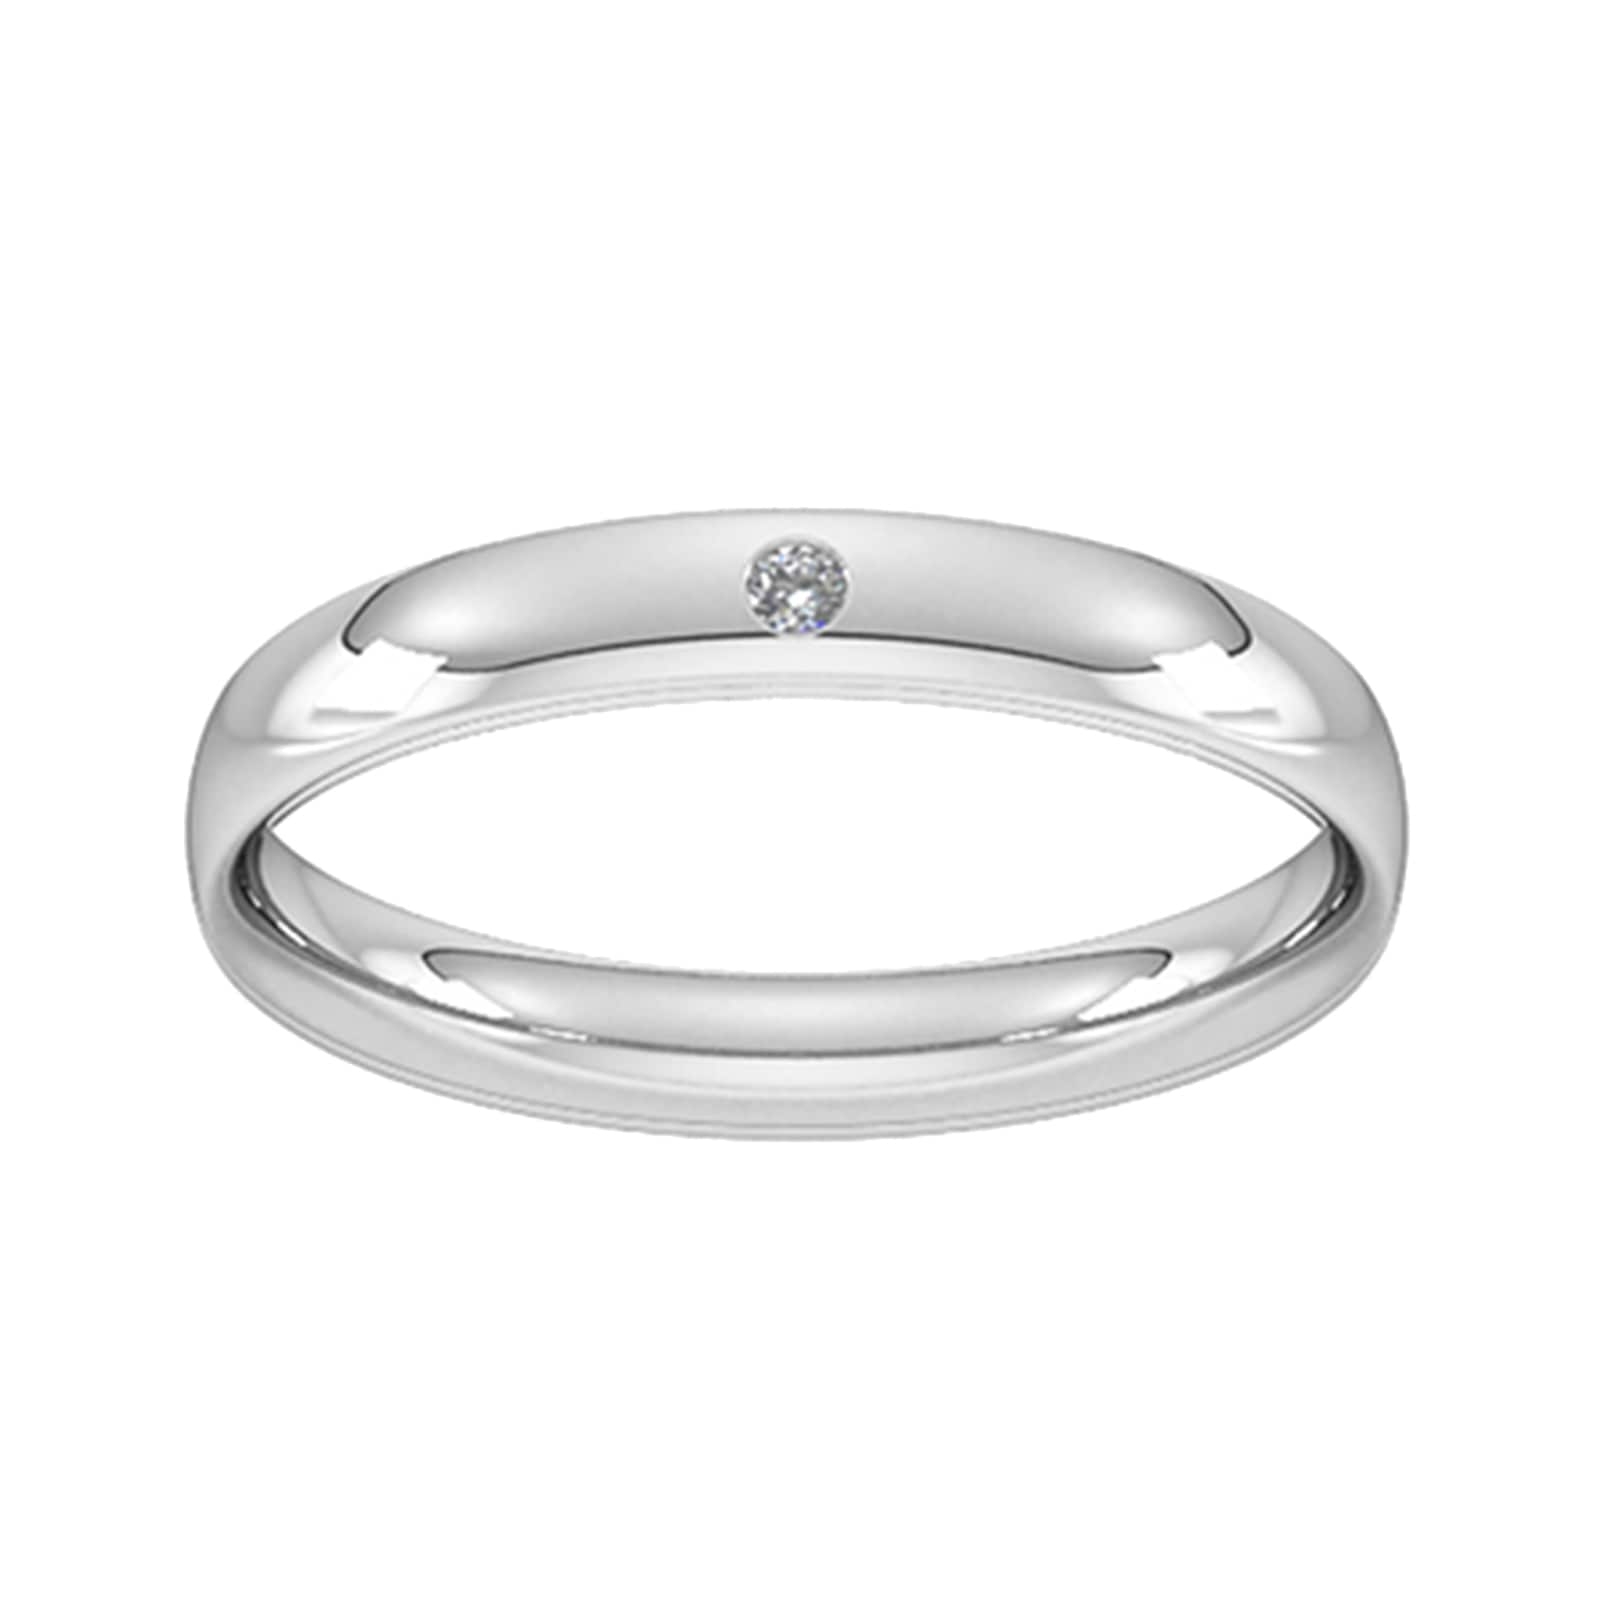 3mm brilliant cut rub over diamond set wedding ring in 9 carat white gold - ring size n